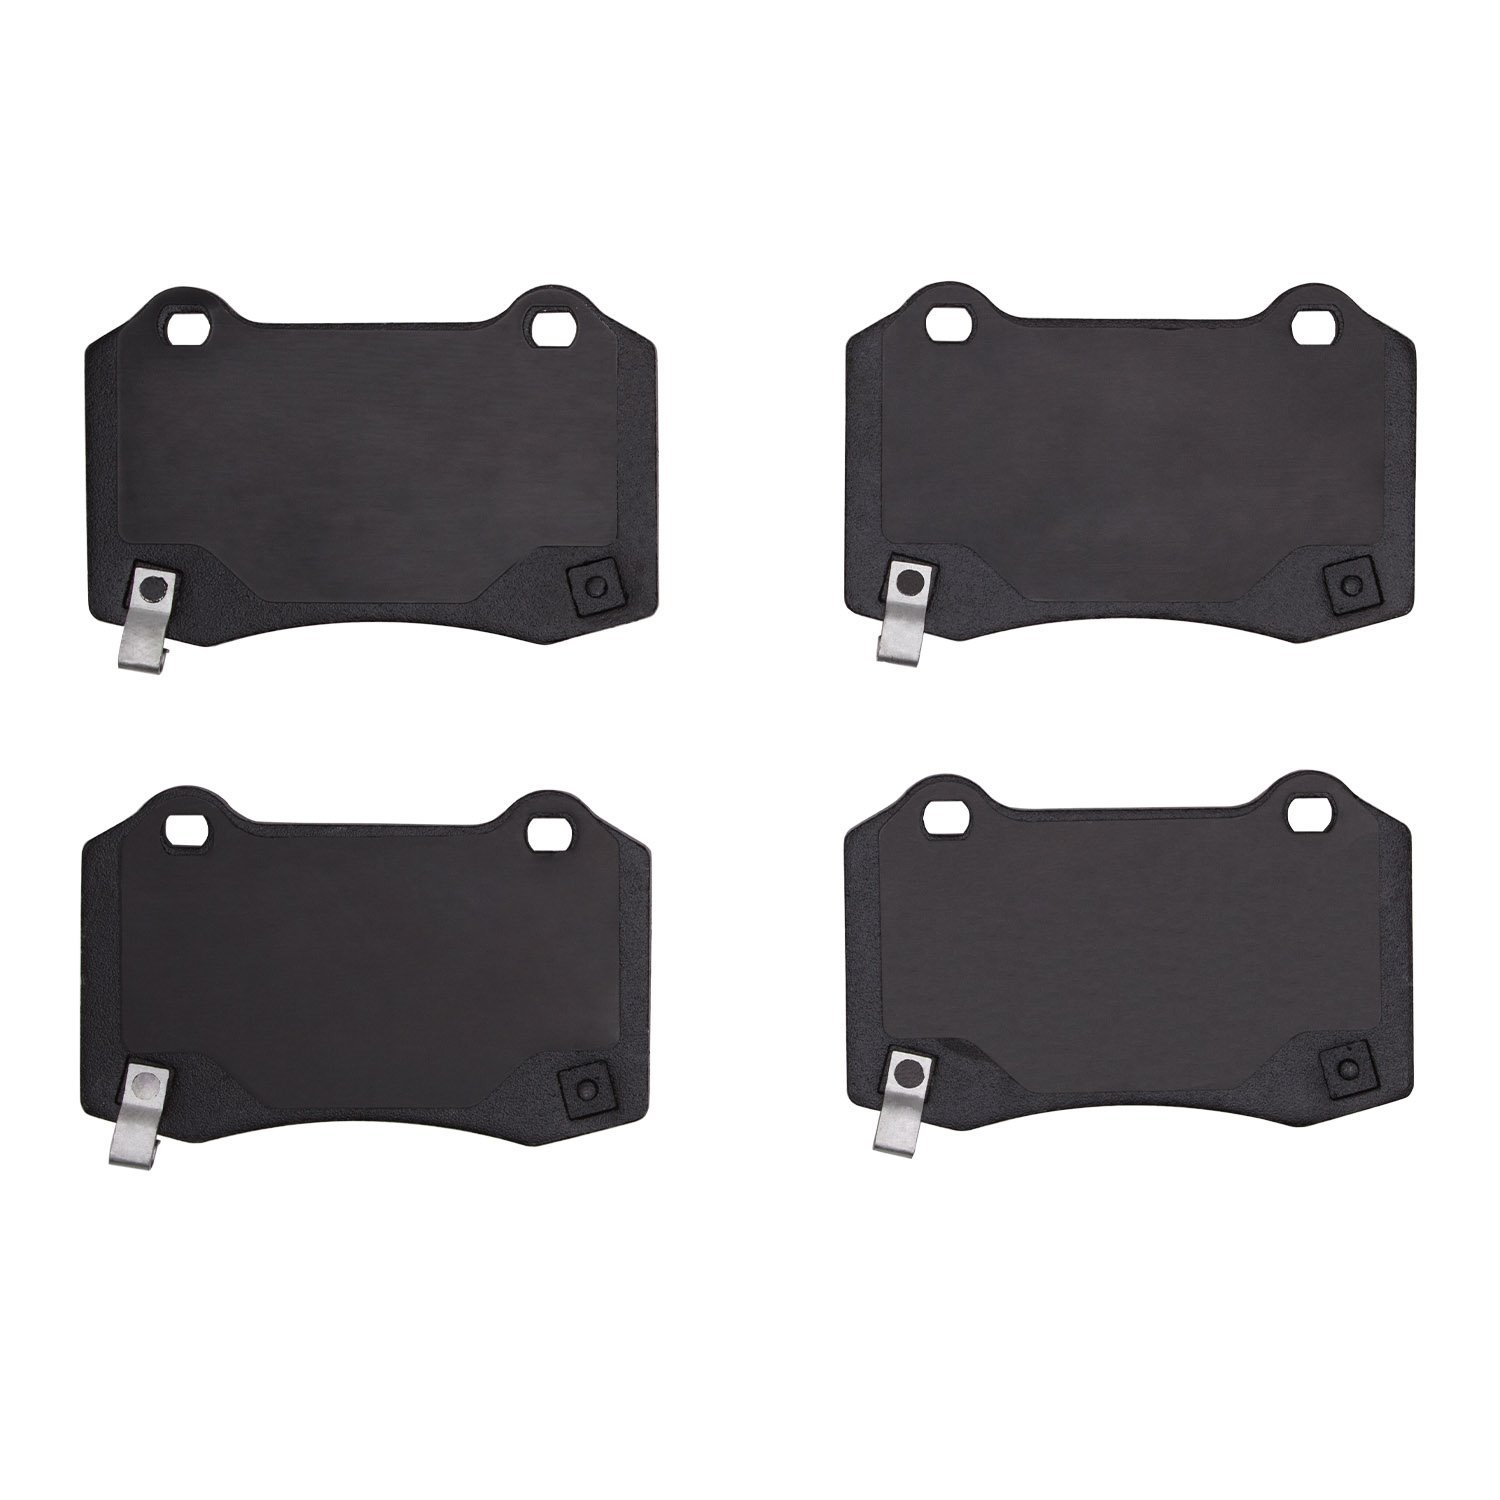 1552-1053-00 5000 Advanced Ceramic Brake Pads, Fits Select Multiple Makes/Models, Position: Rear